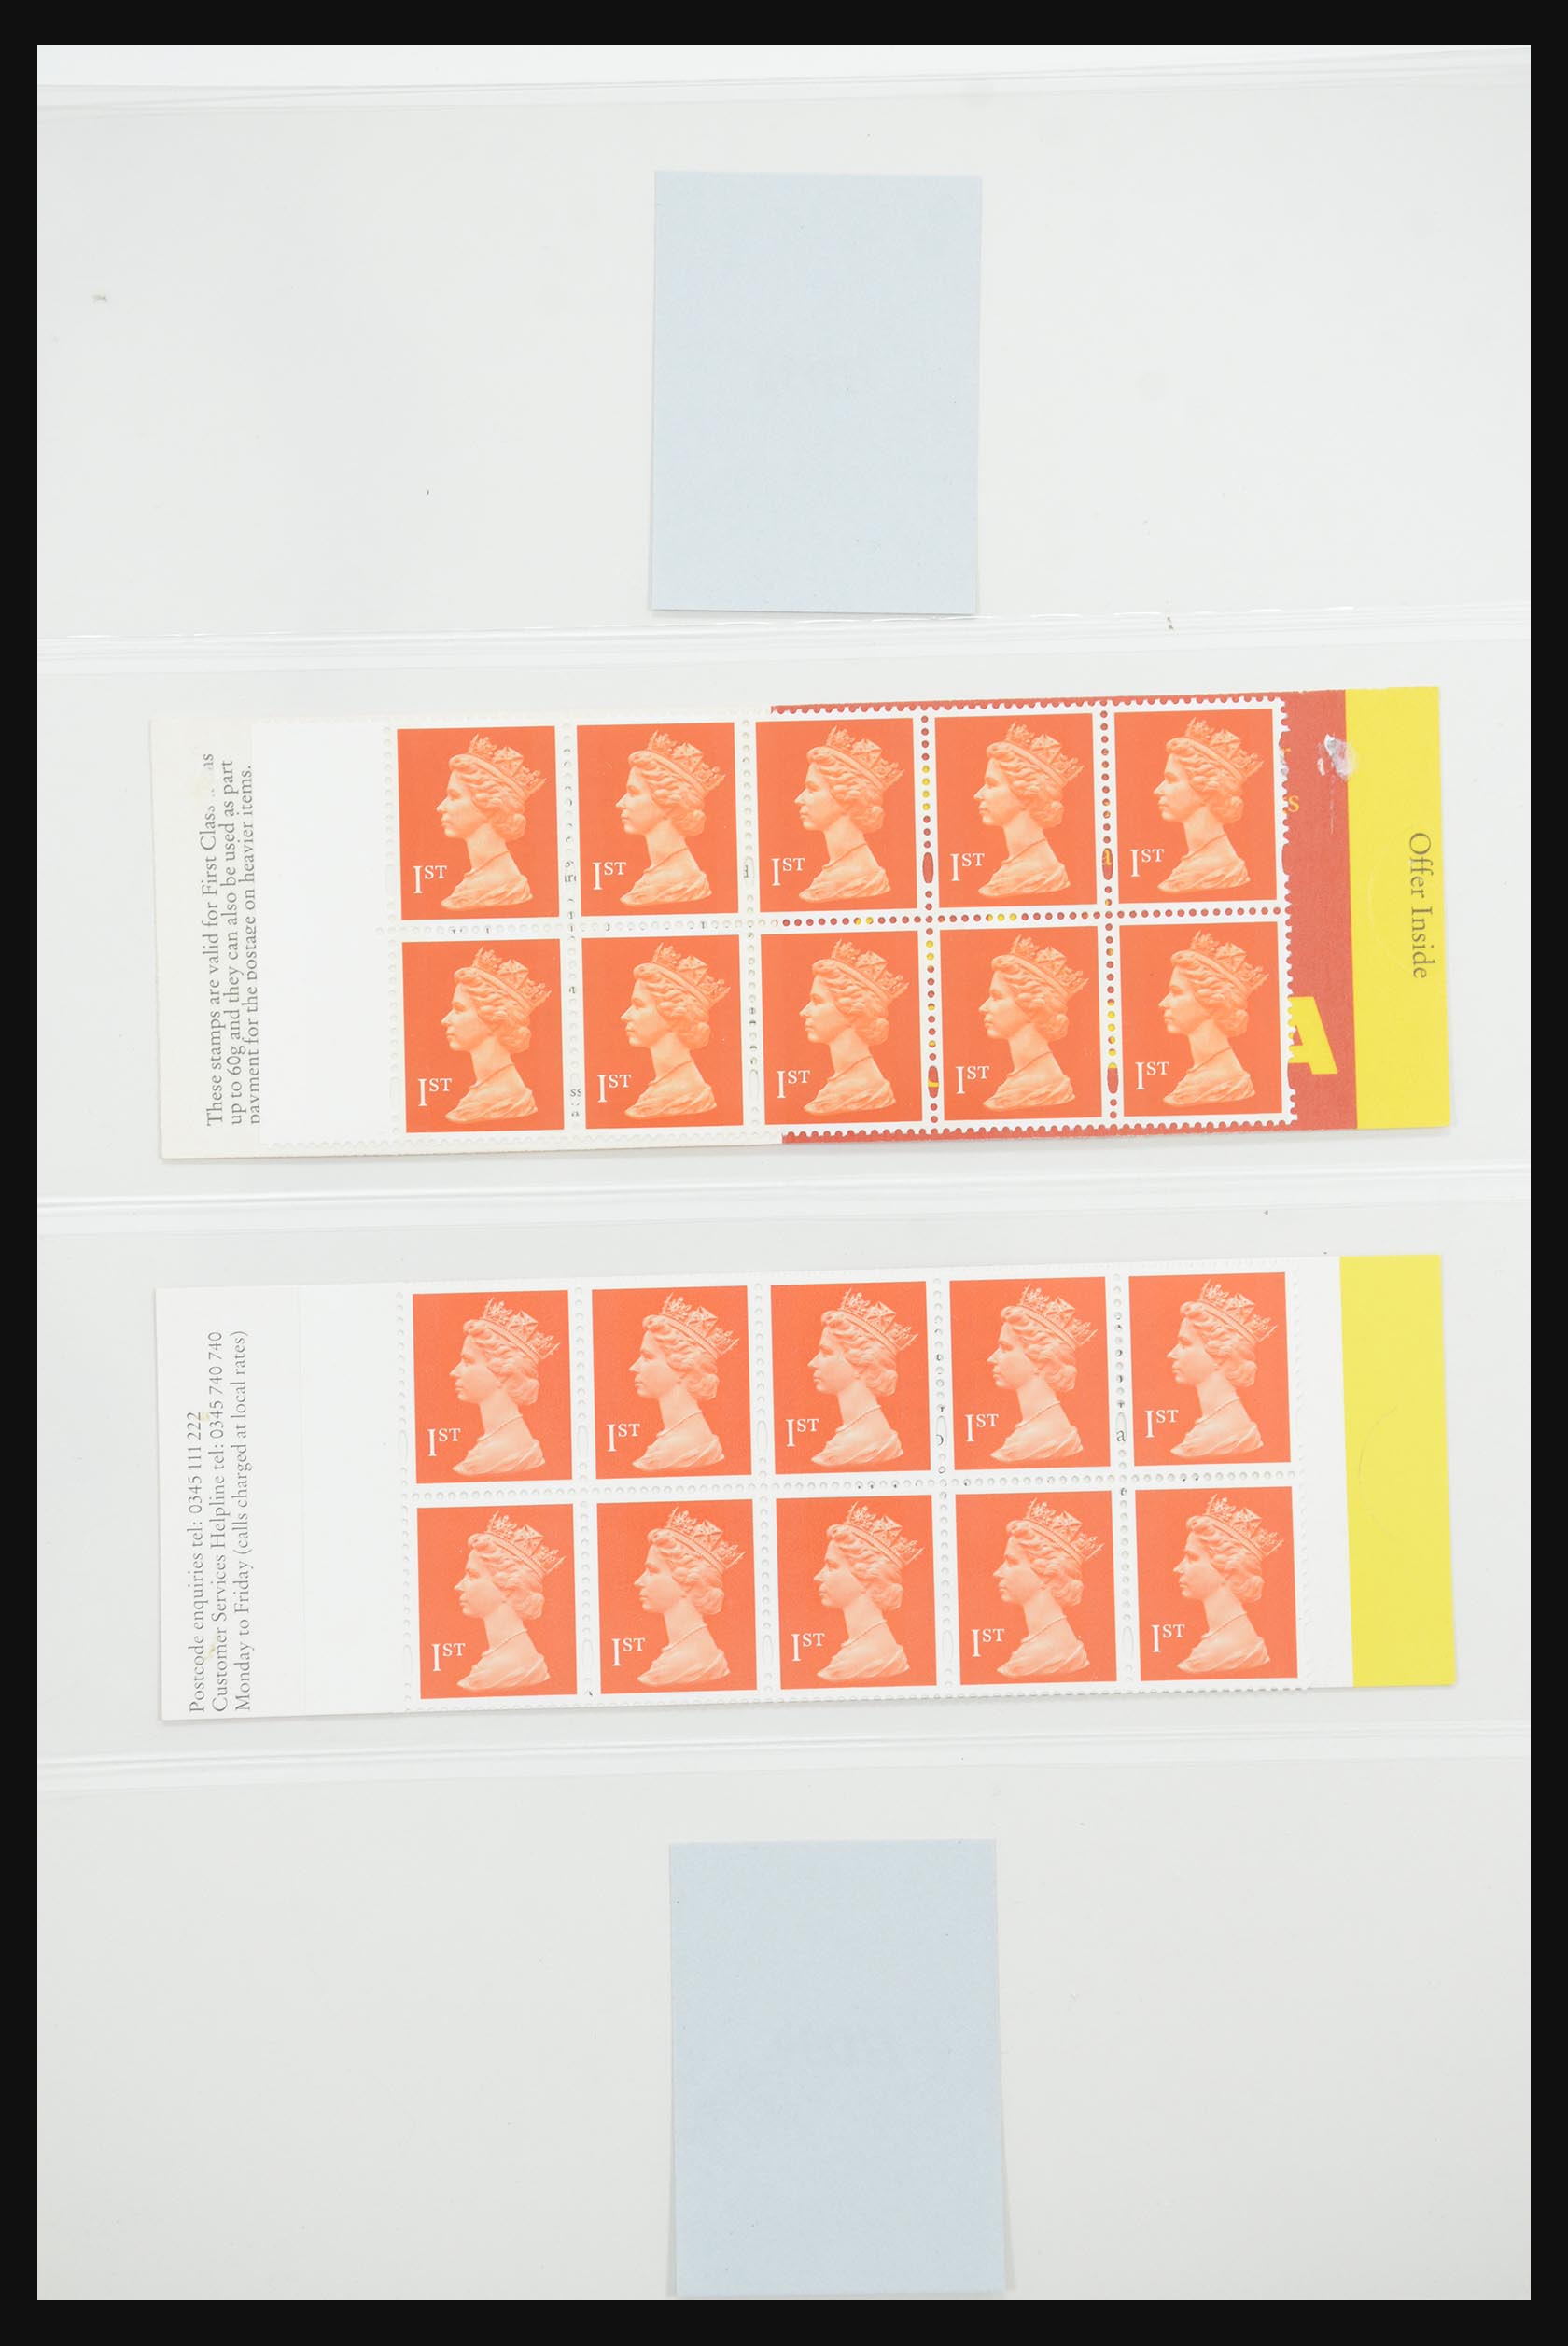 31960 156 - 31960 Great Britain stampbooklets 1989-2000.